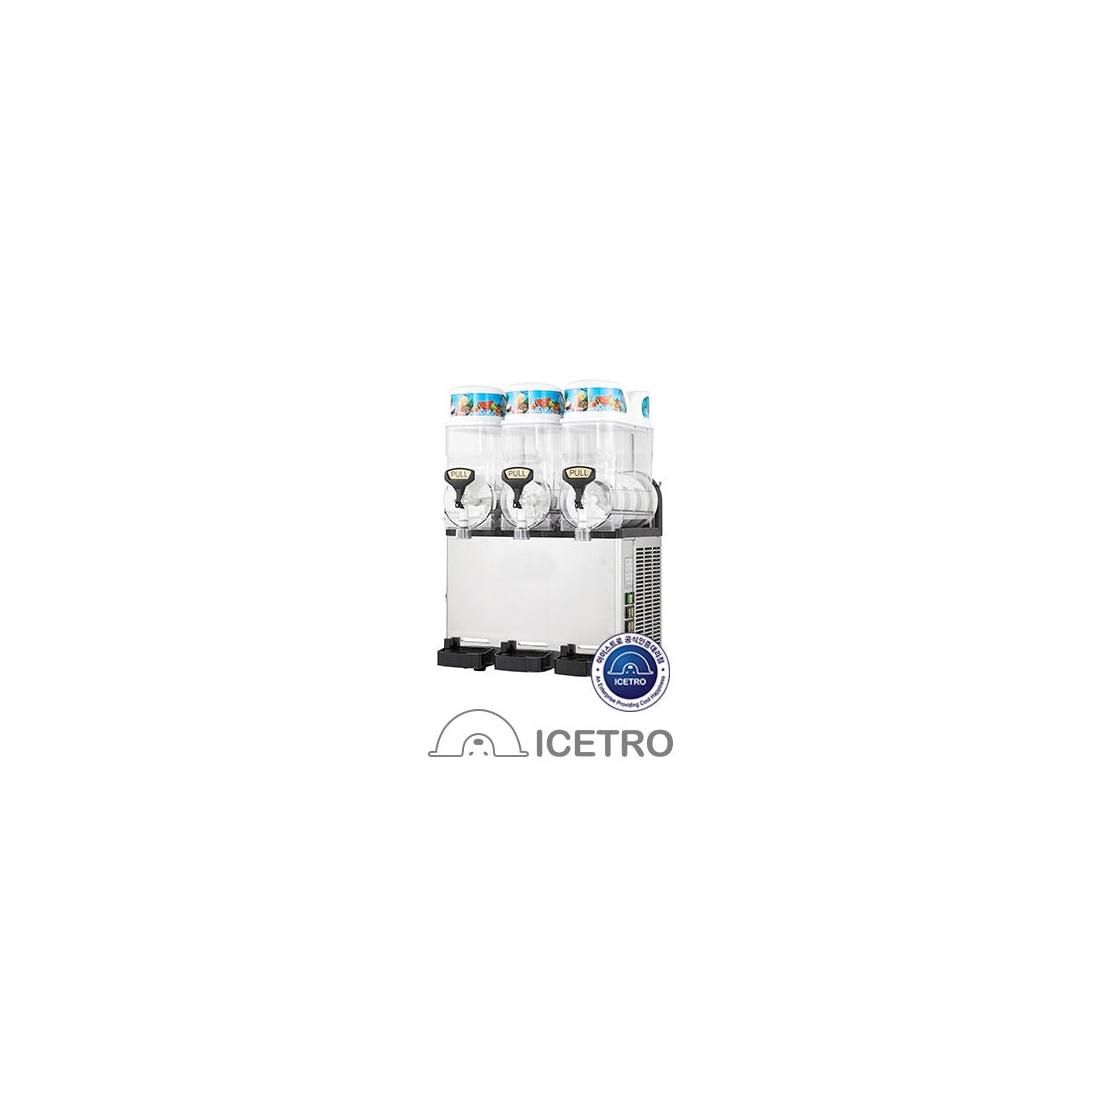 Icetro ,SSM-420, 3 Compartments Slush Machine 36L|mkayn|مكاين